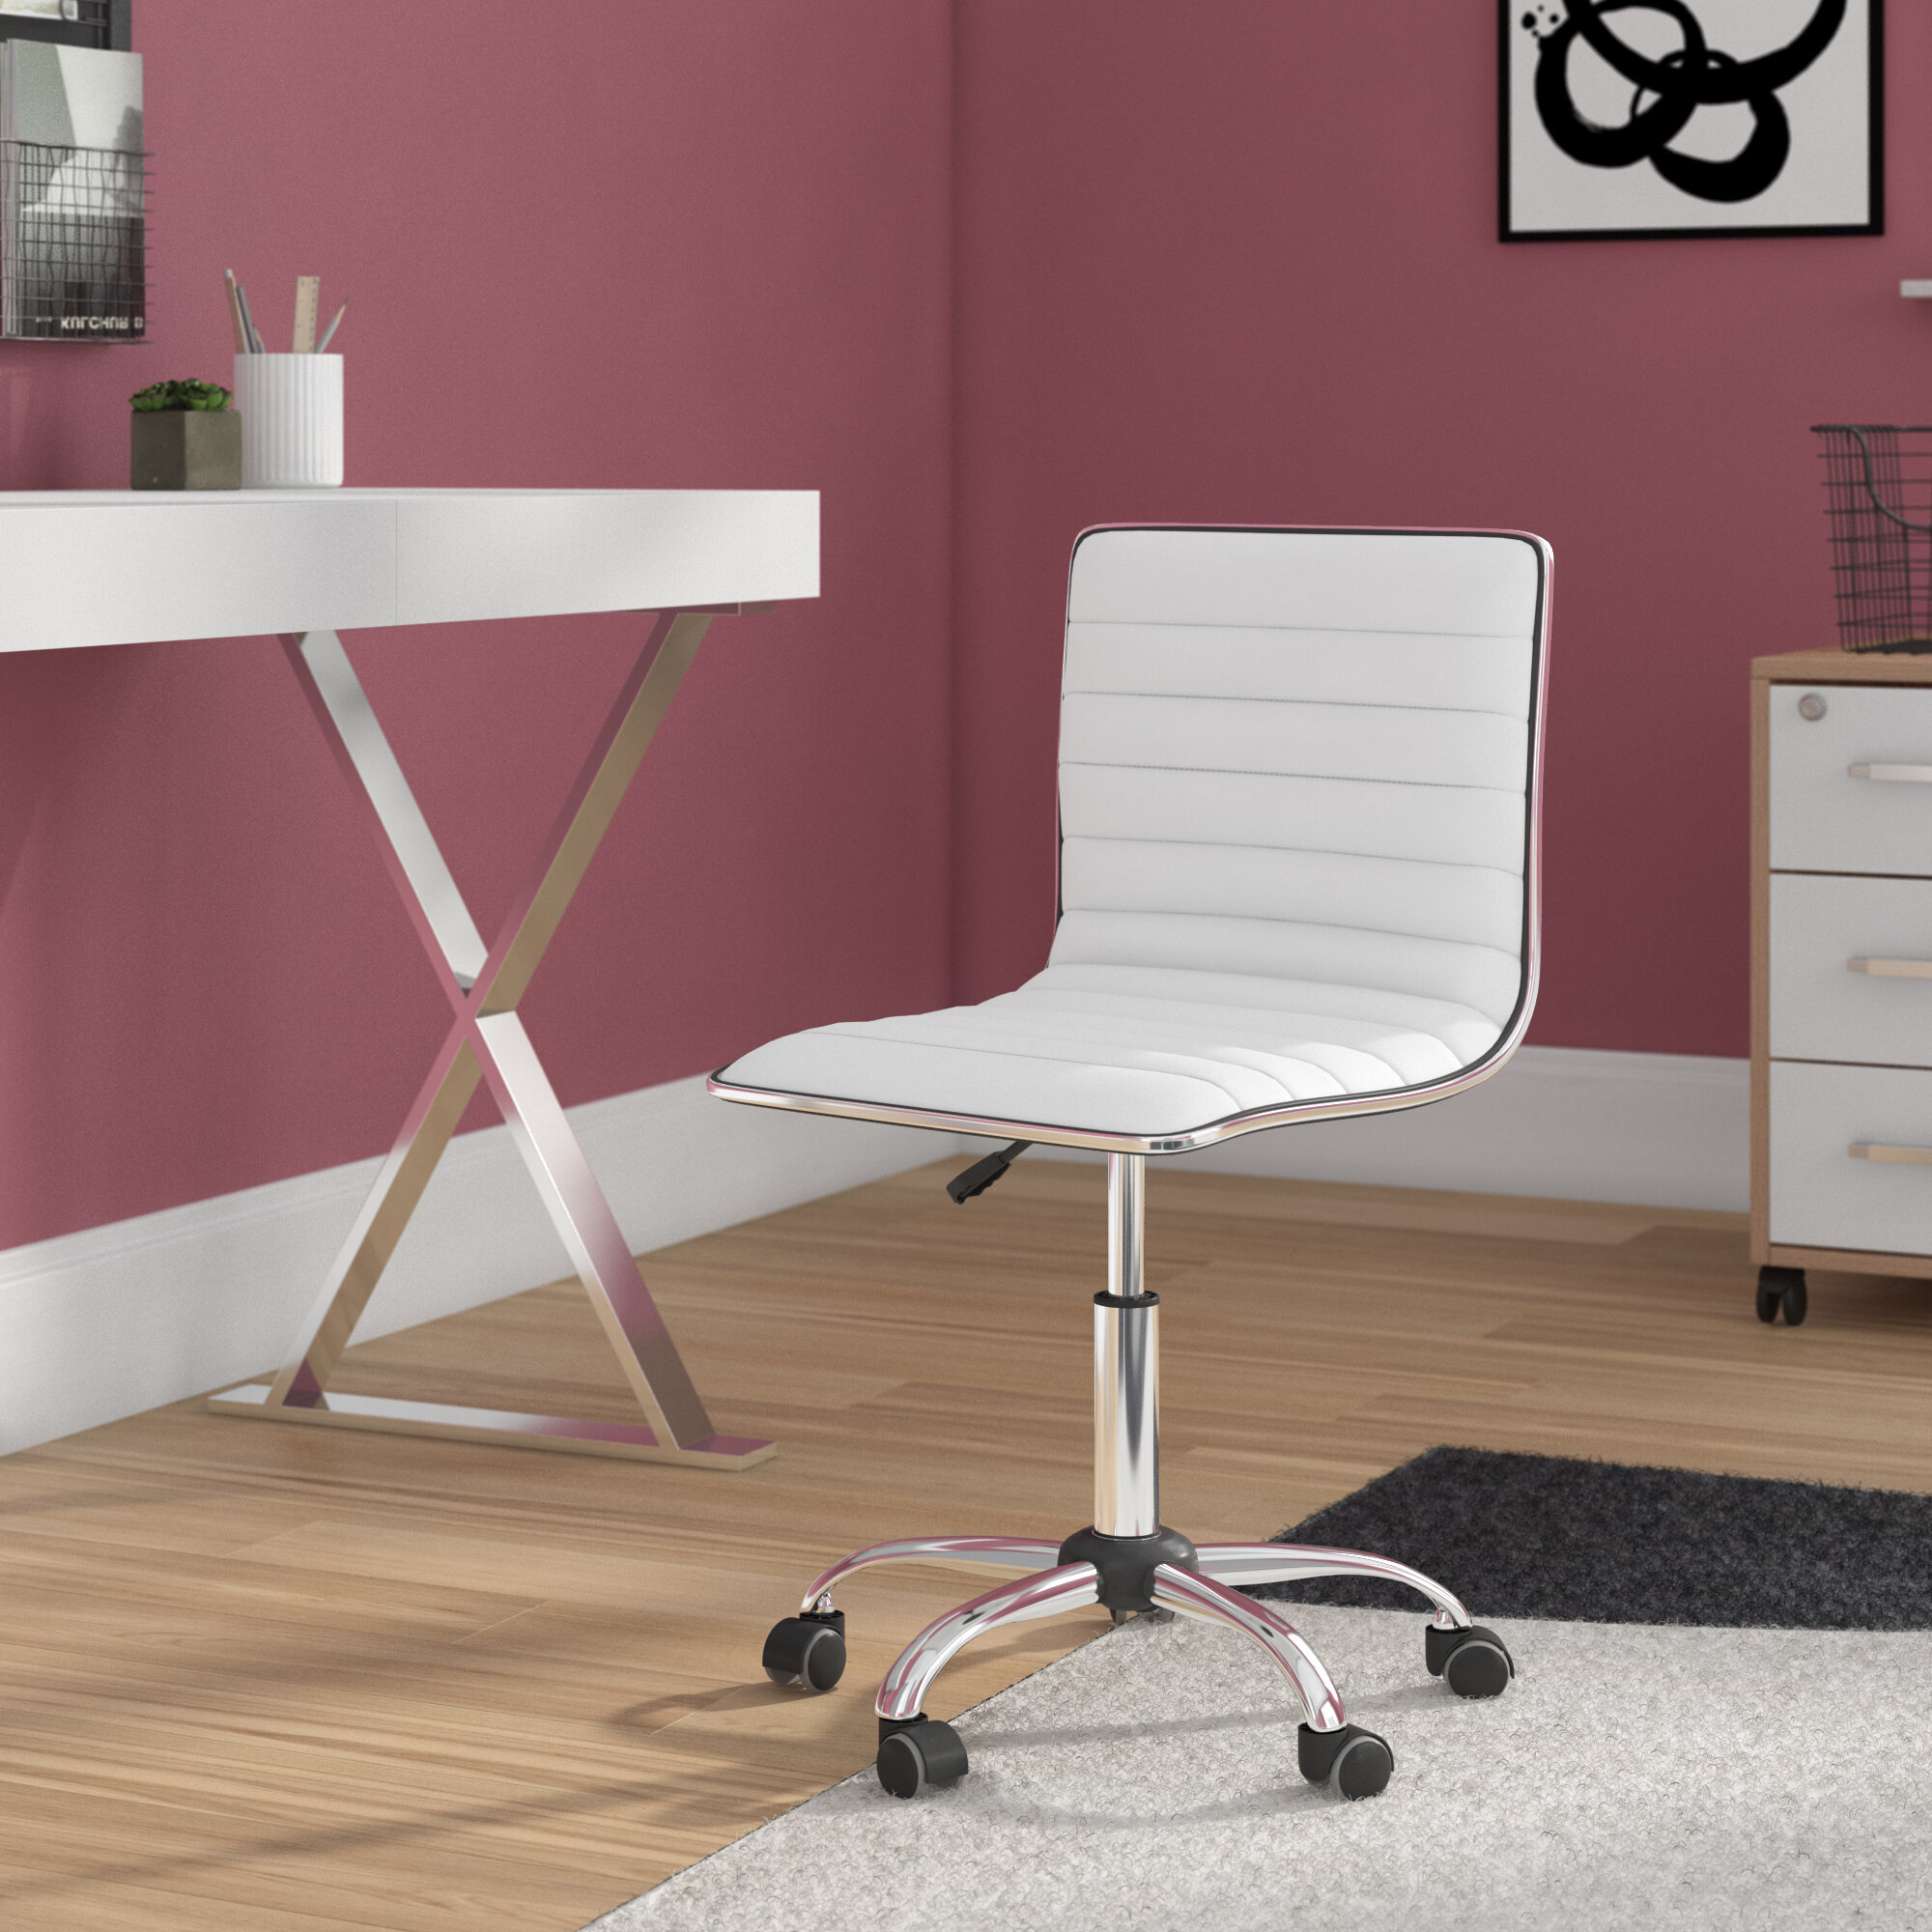 STAFFPENGUIN Office chair, Desk chair Ergonomic Pink Office